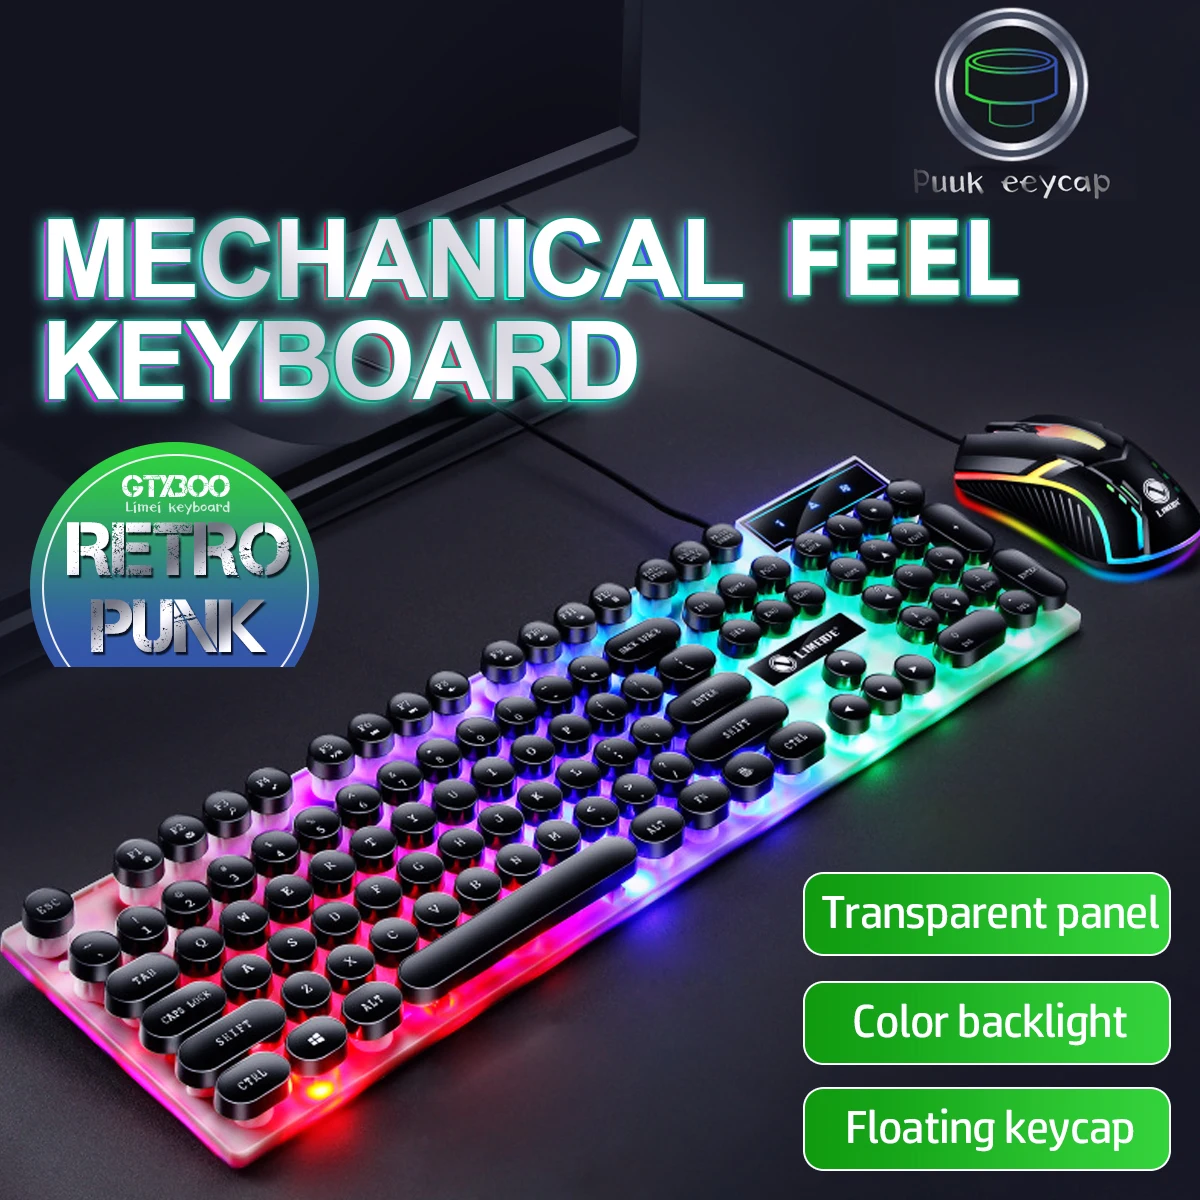 

ANMONE Gamer Mechanical Feel Keyboard 104 Keys Retro Gtx300 Punk Round Keycap Backlit LED Keyboards For Gamers PC Laptop Notbook